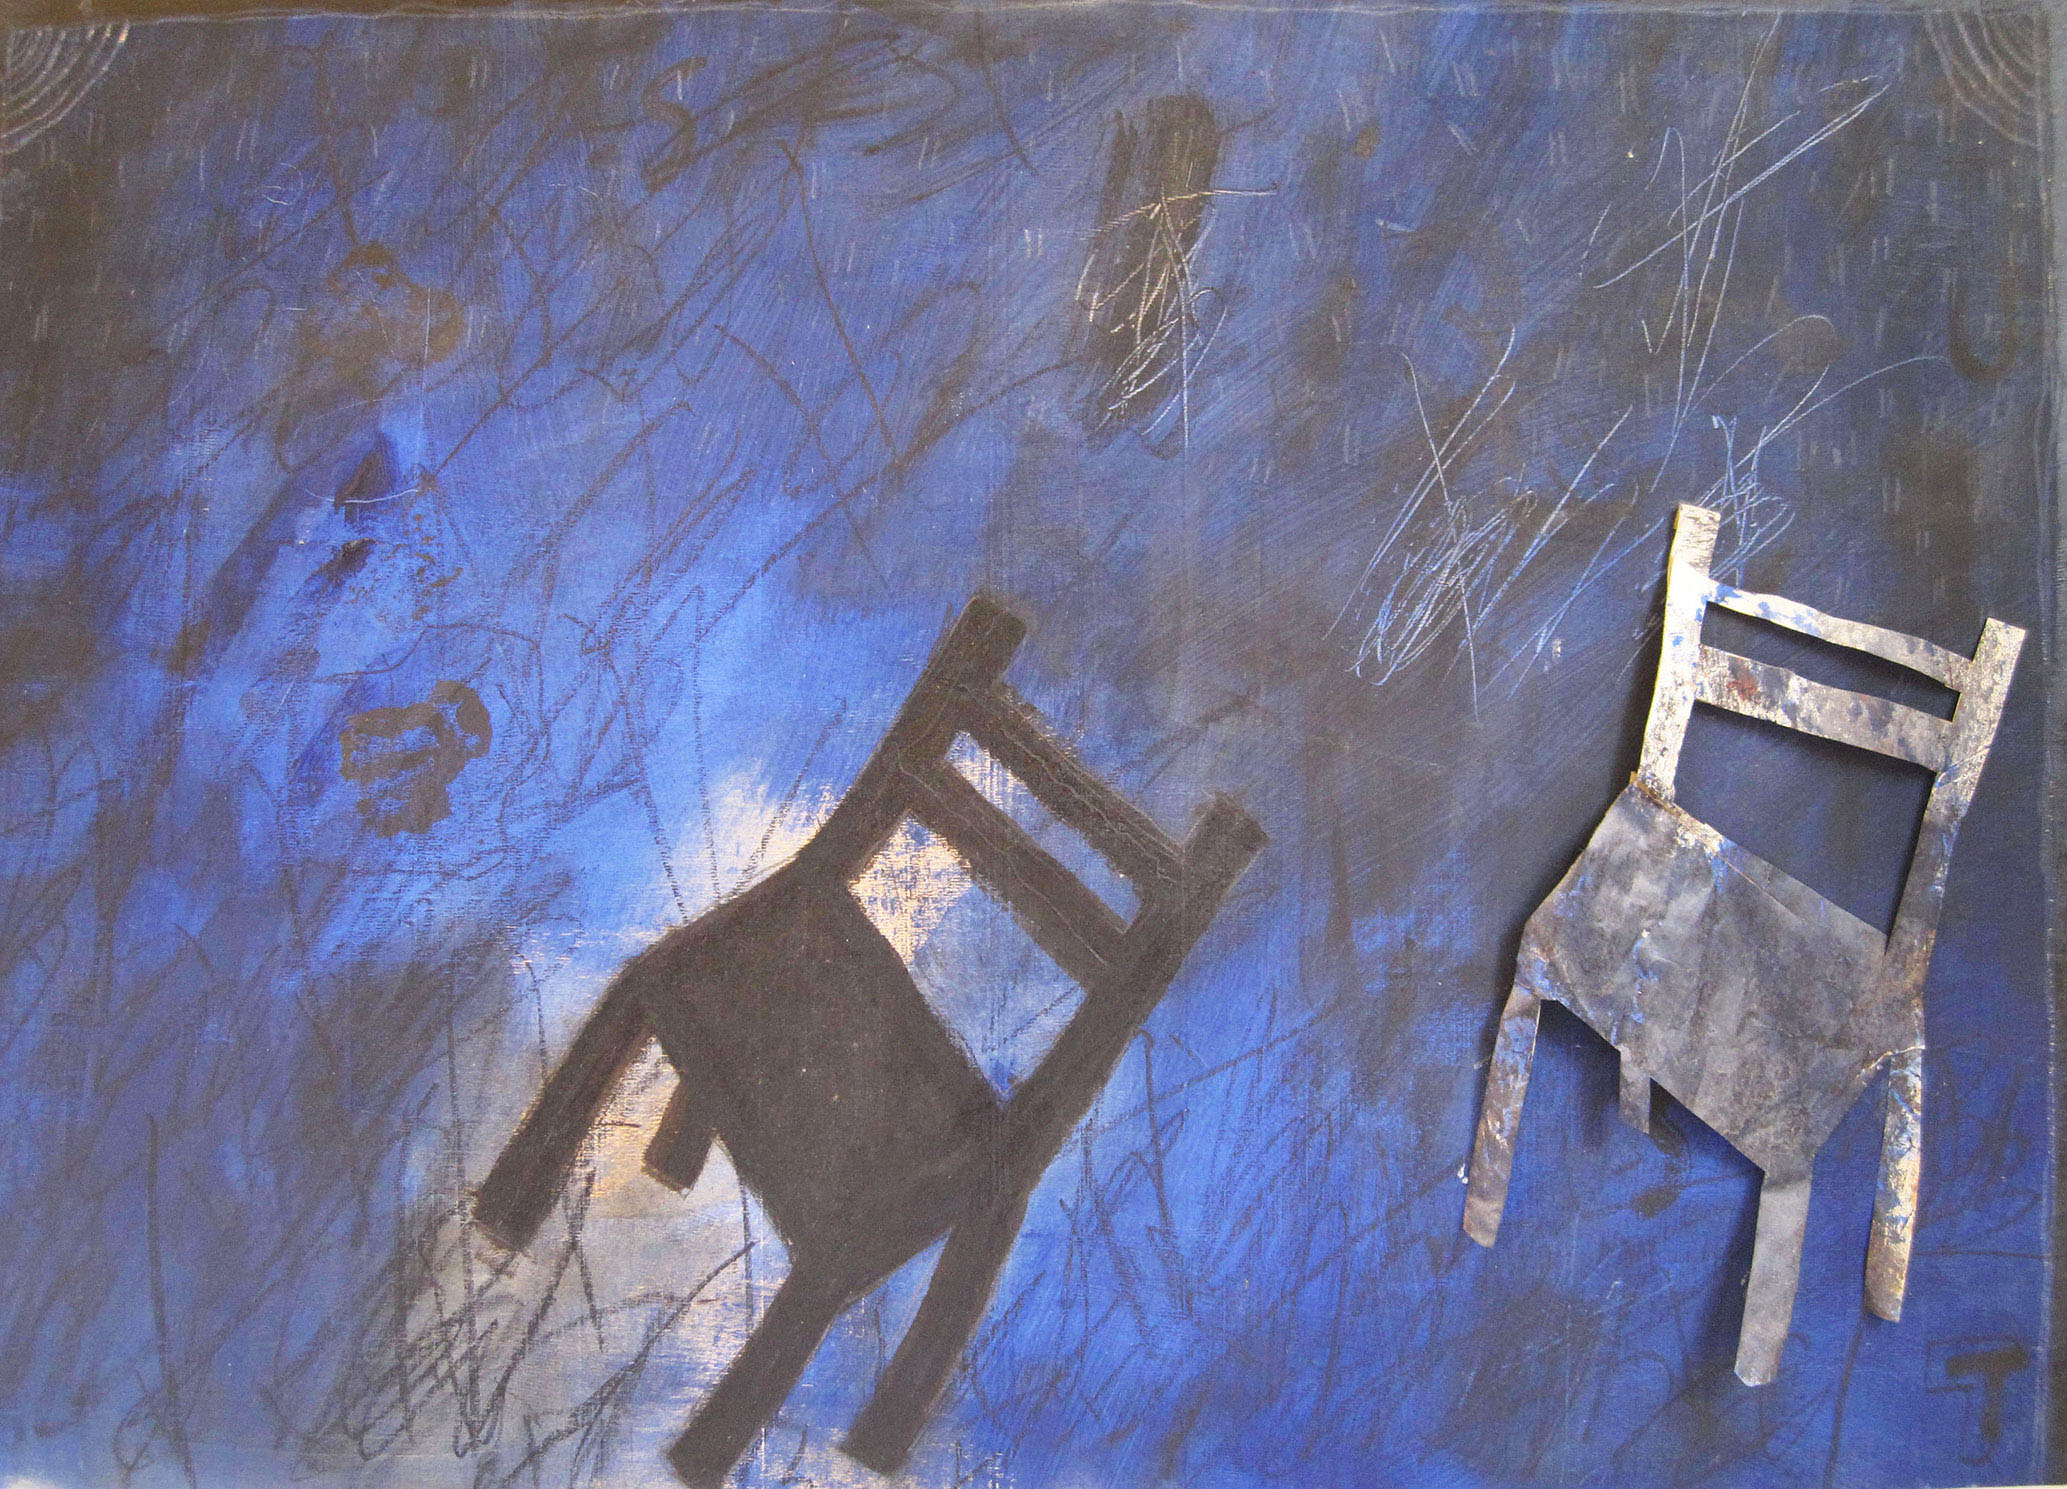 Jürgen's Chair, Jürgens Stuhl, 2017 - oil and collage on board, 57.5x82 cm- olio e collage su tavola, cm 57,5x82